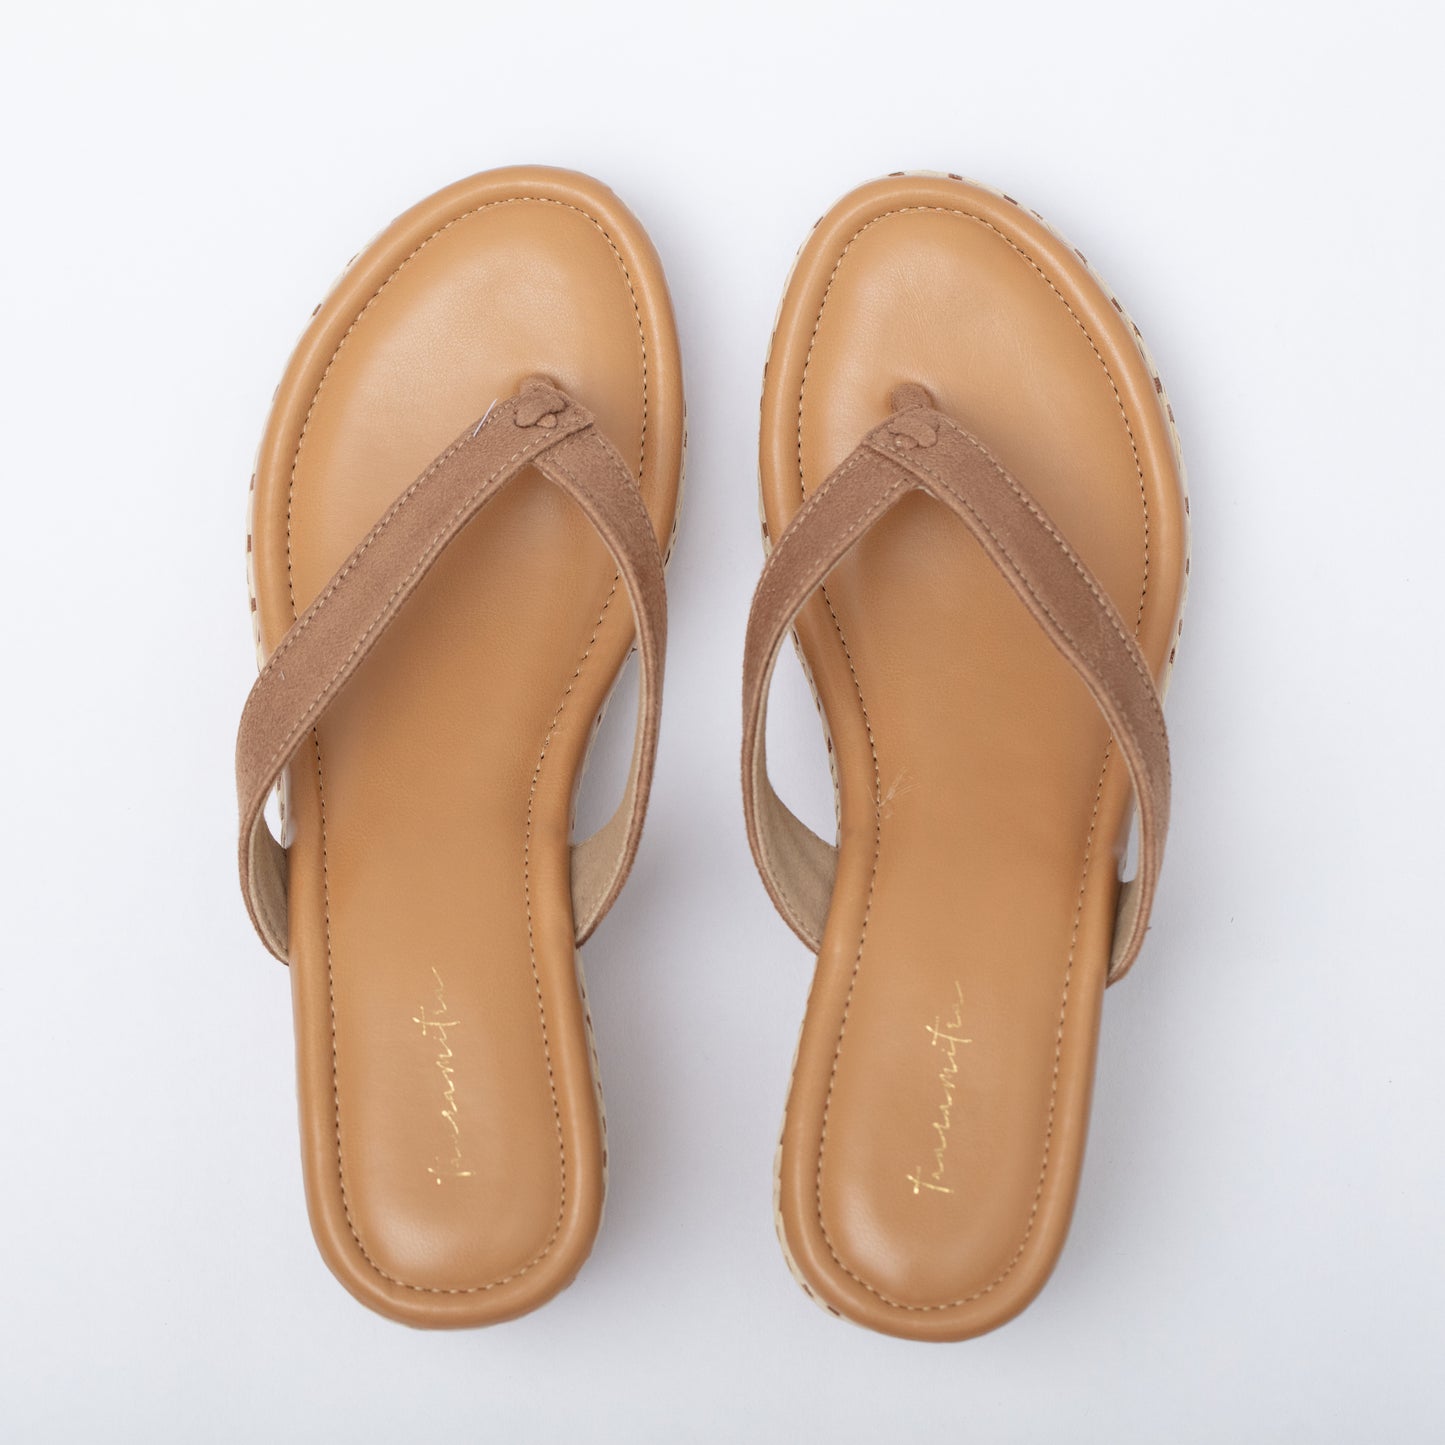 Juniper tan wedge sandals